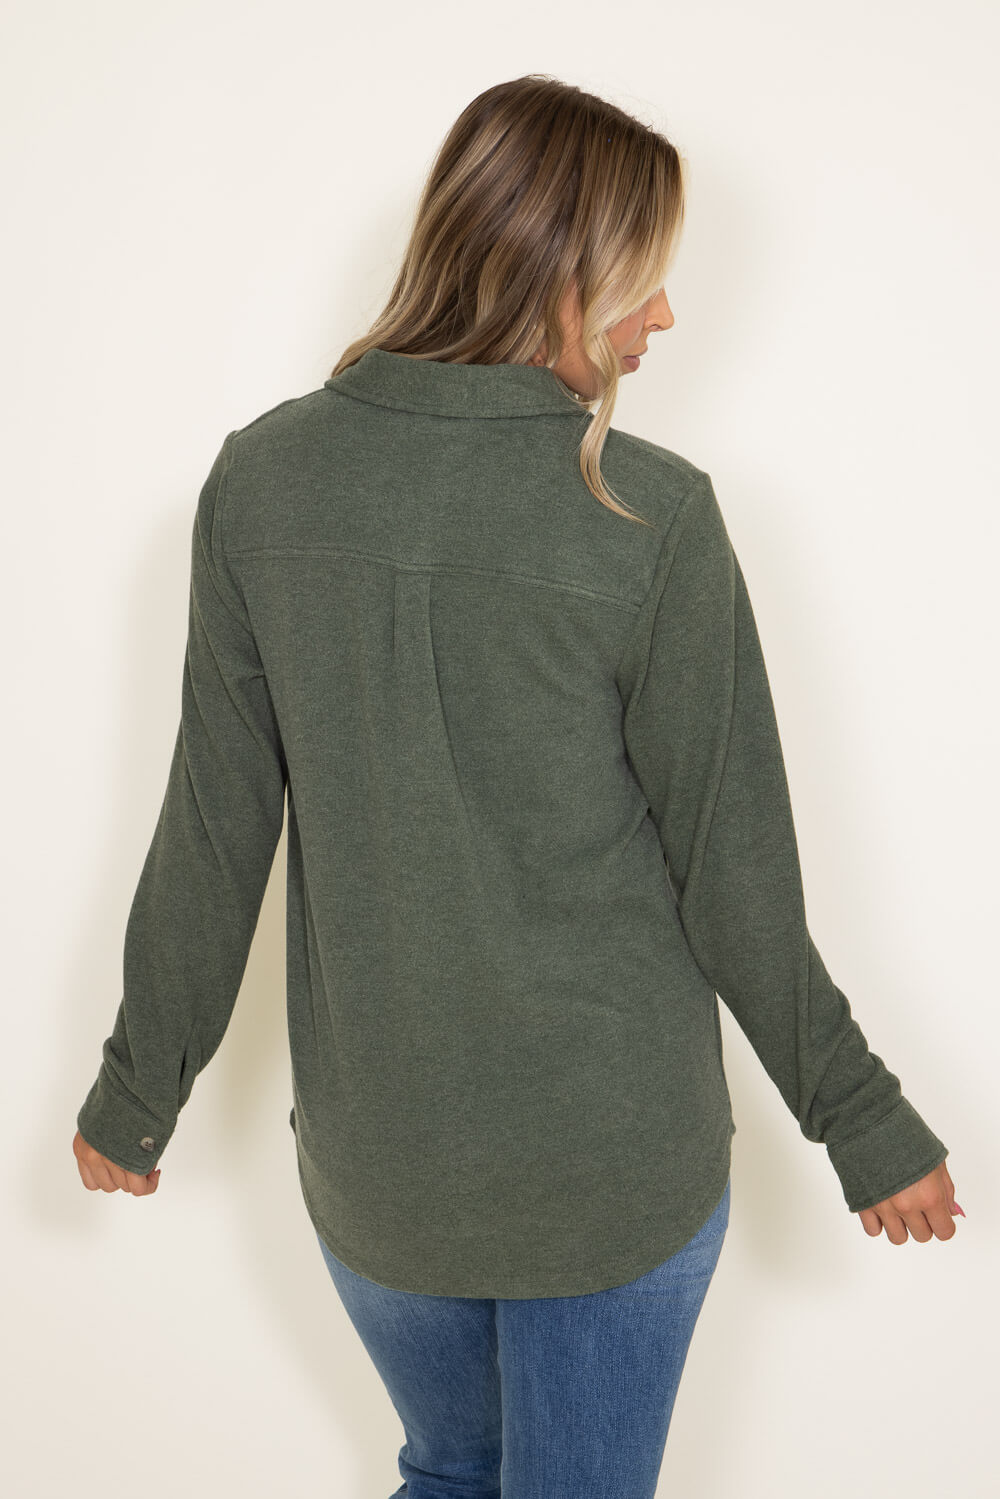 Thread & Supply Lewis Shirt for Women in Green | T1084PVXGK-FERN – Glik\'s